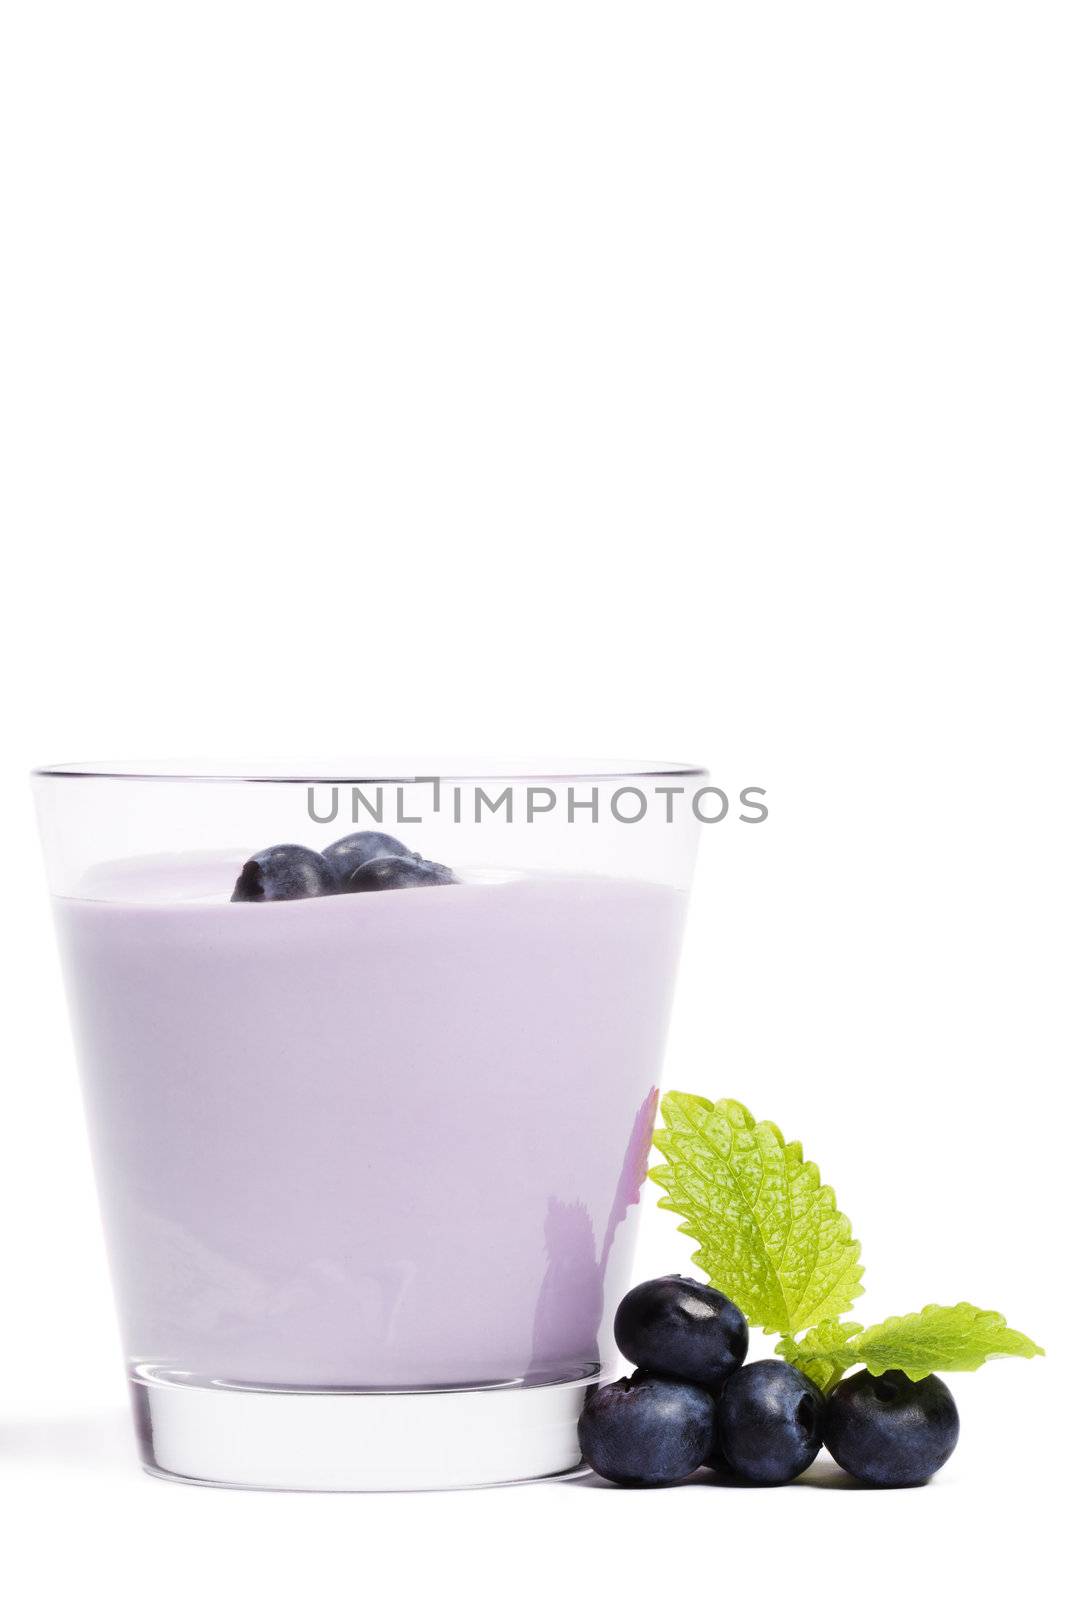 some blueberries with melissa near a milkshake by RobStark